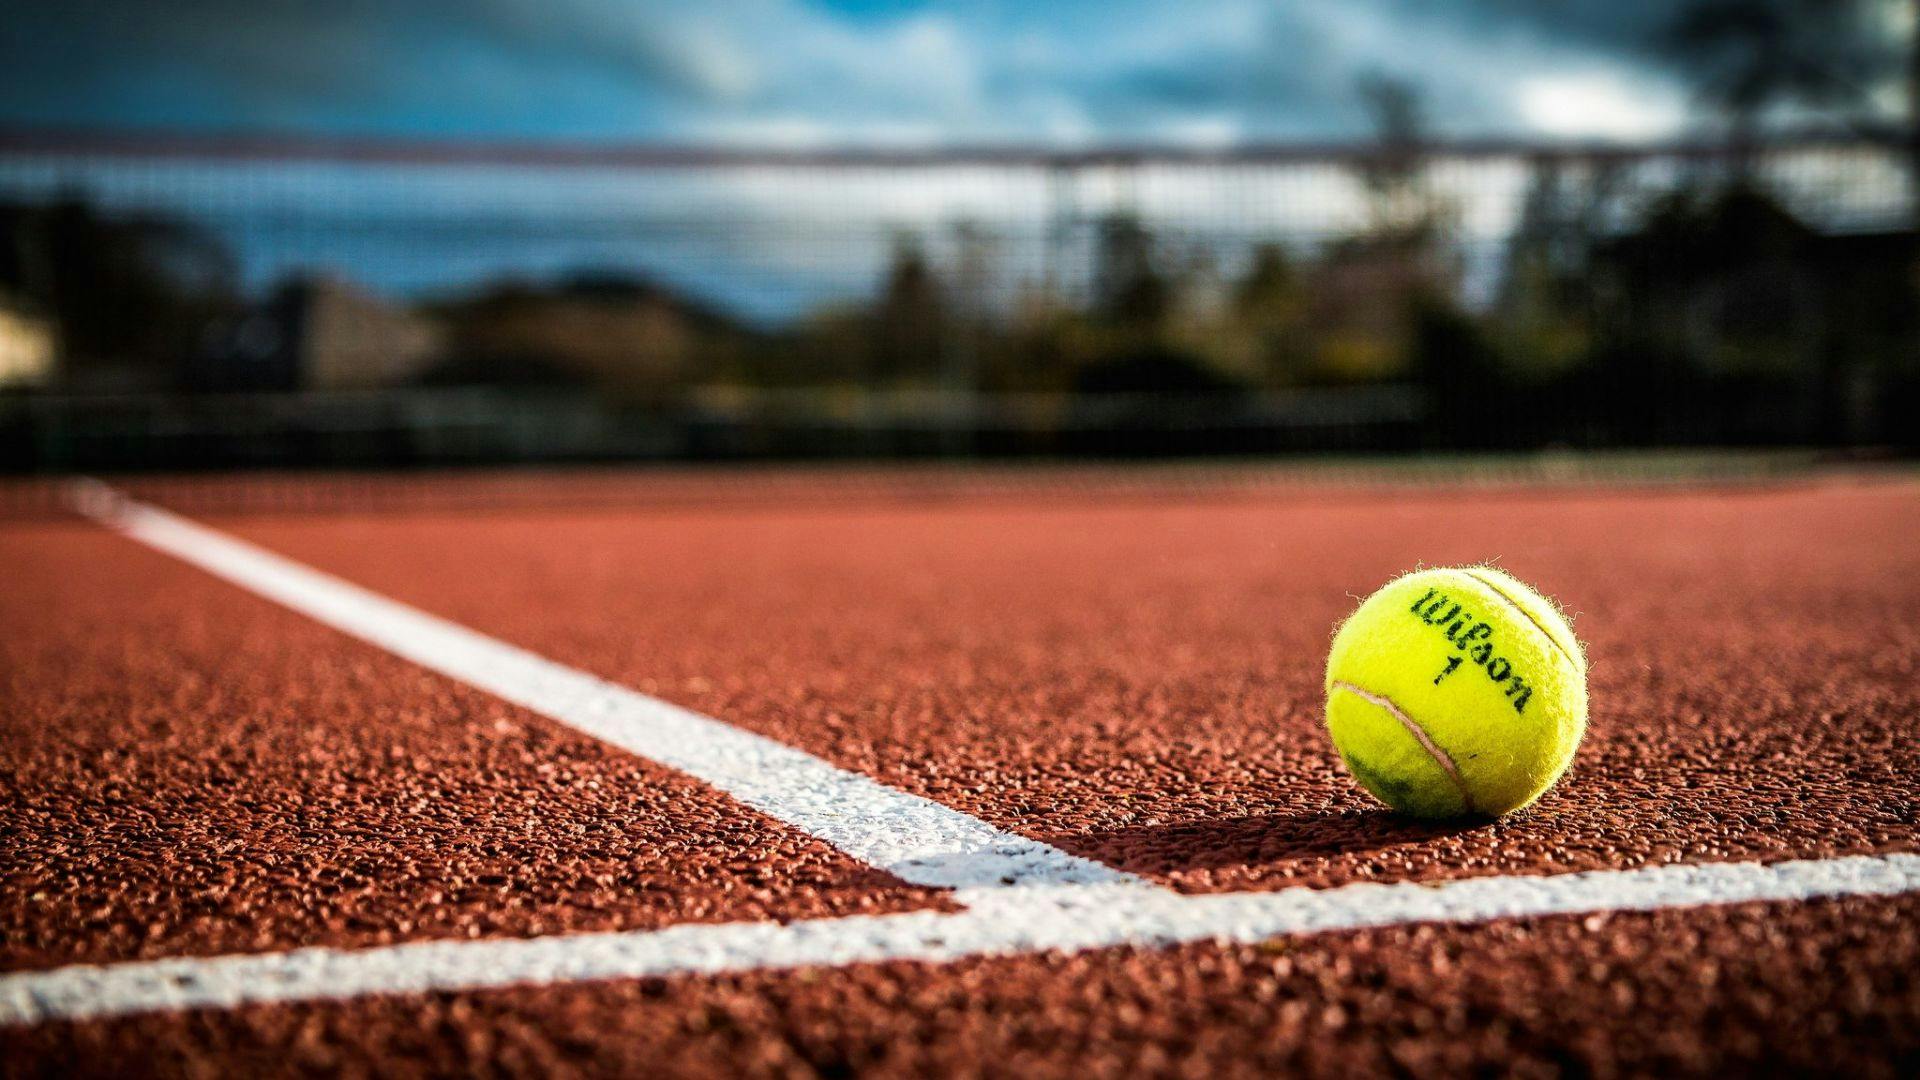 Tenis ball on a tennis court